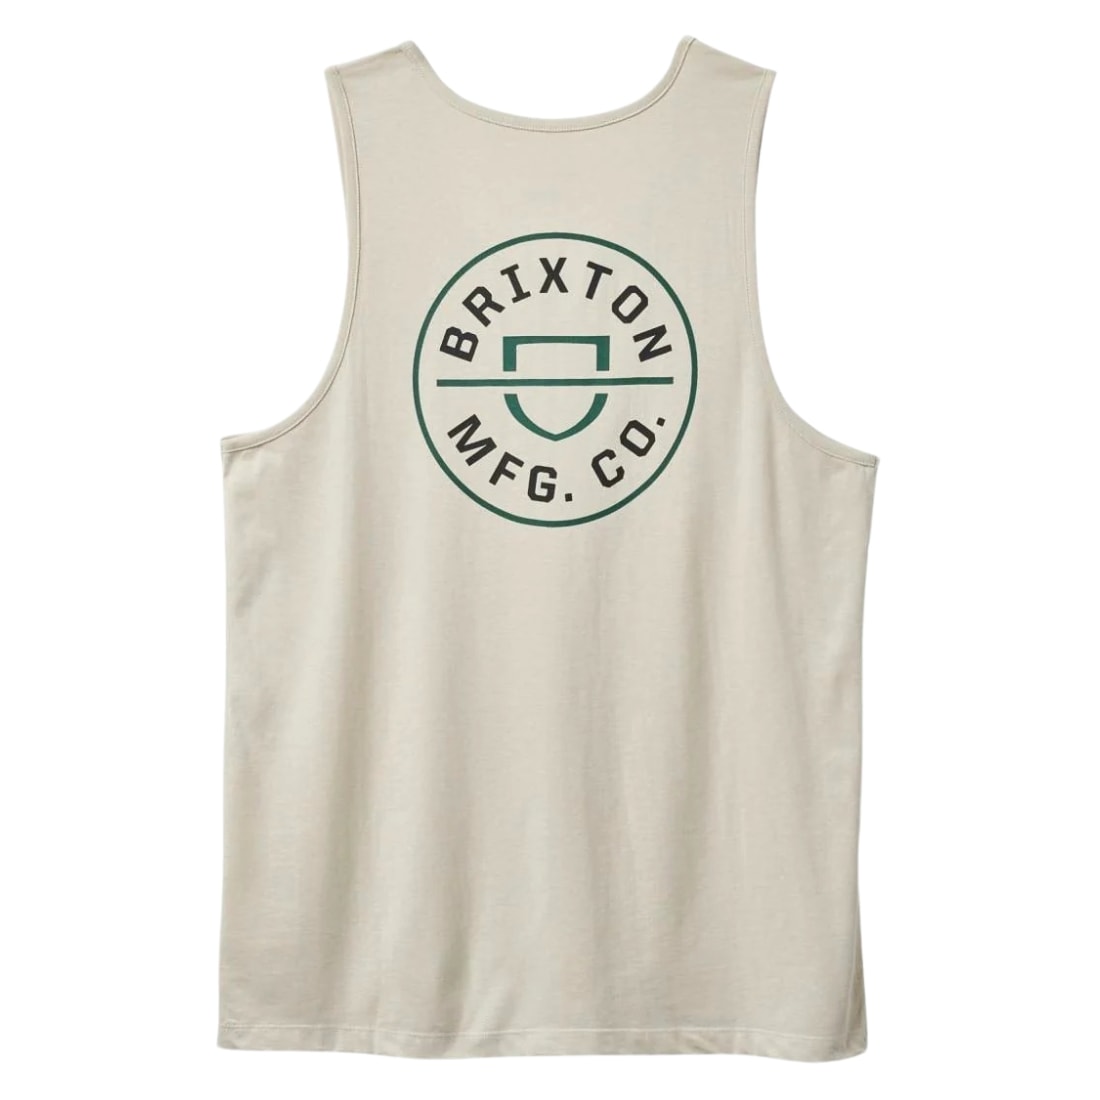 Brixton Crest Tank Top Vest - Beige/Trekking Green/Black - Mens Skate Brand Vest/Tank Top by Brixton